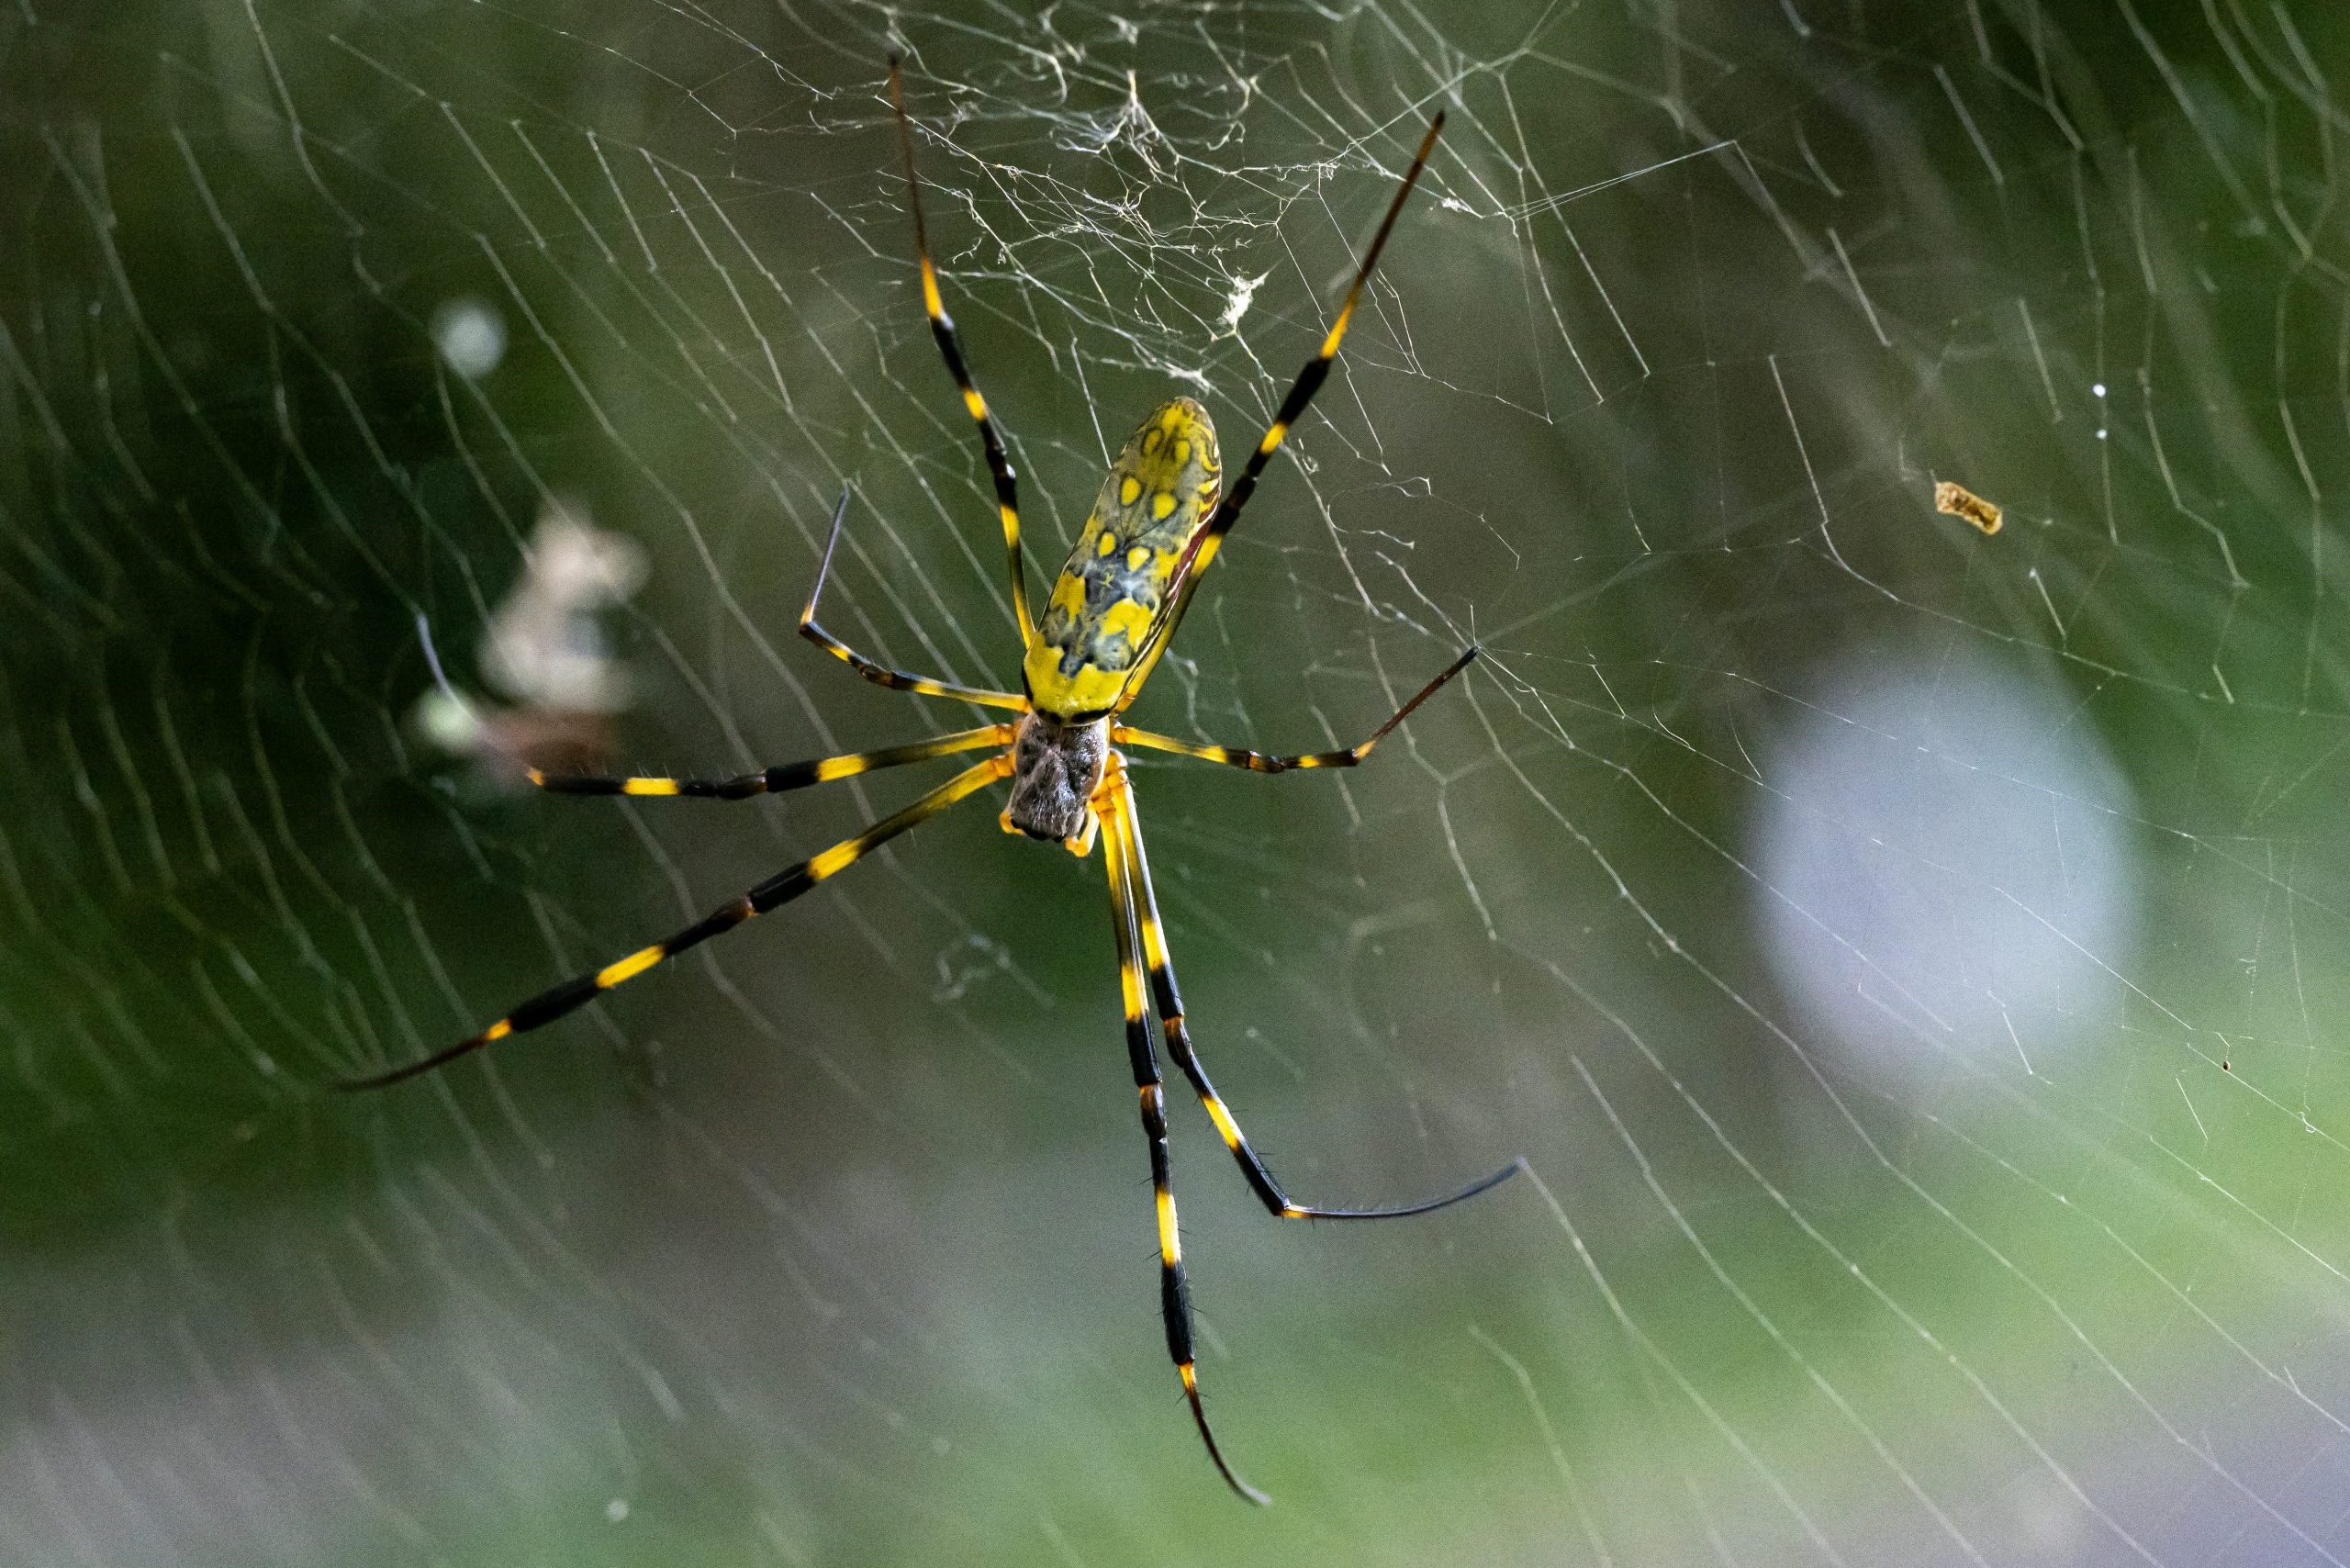 Spider - Predator, Web-building, Venom